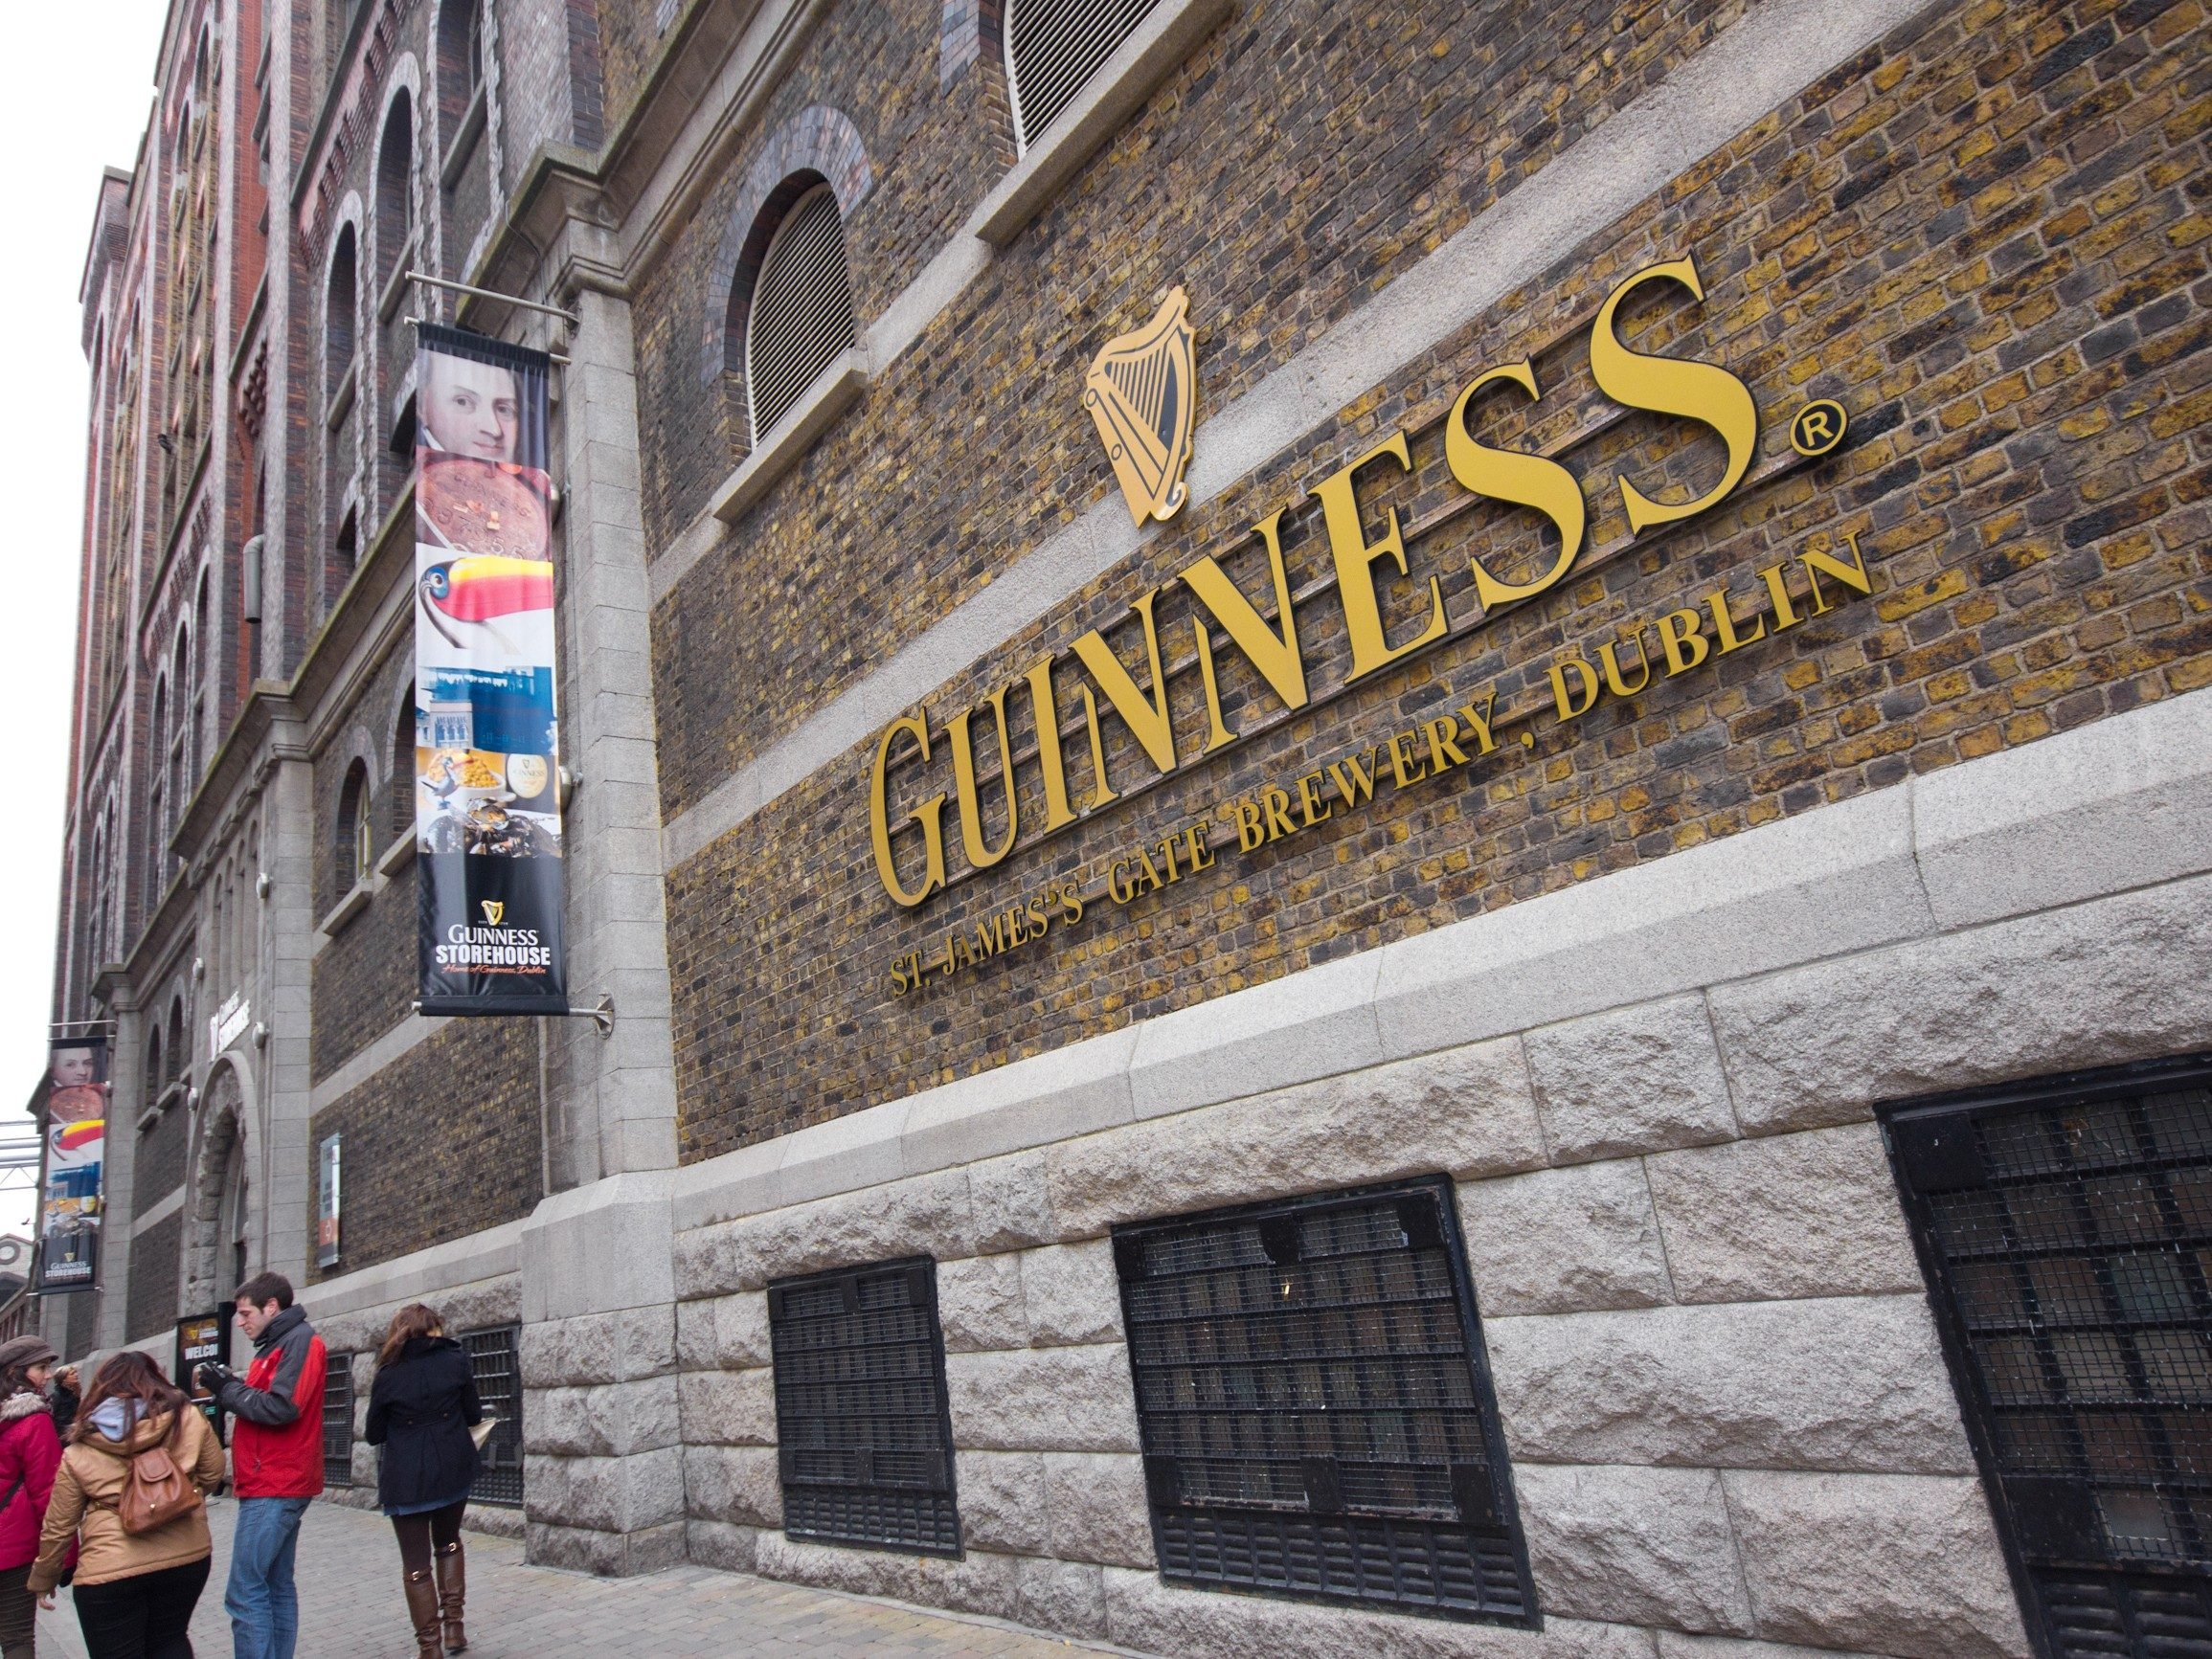 2. Tour the Guinness Storehouse